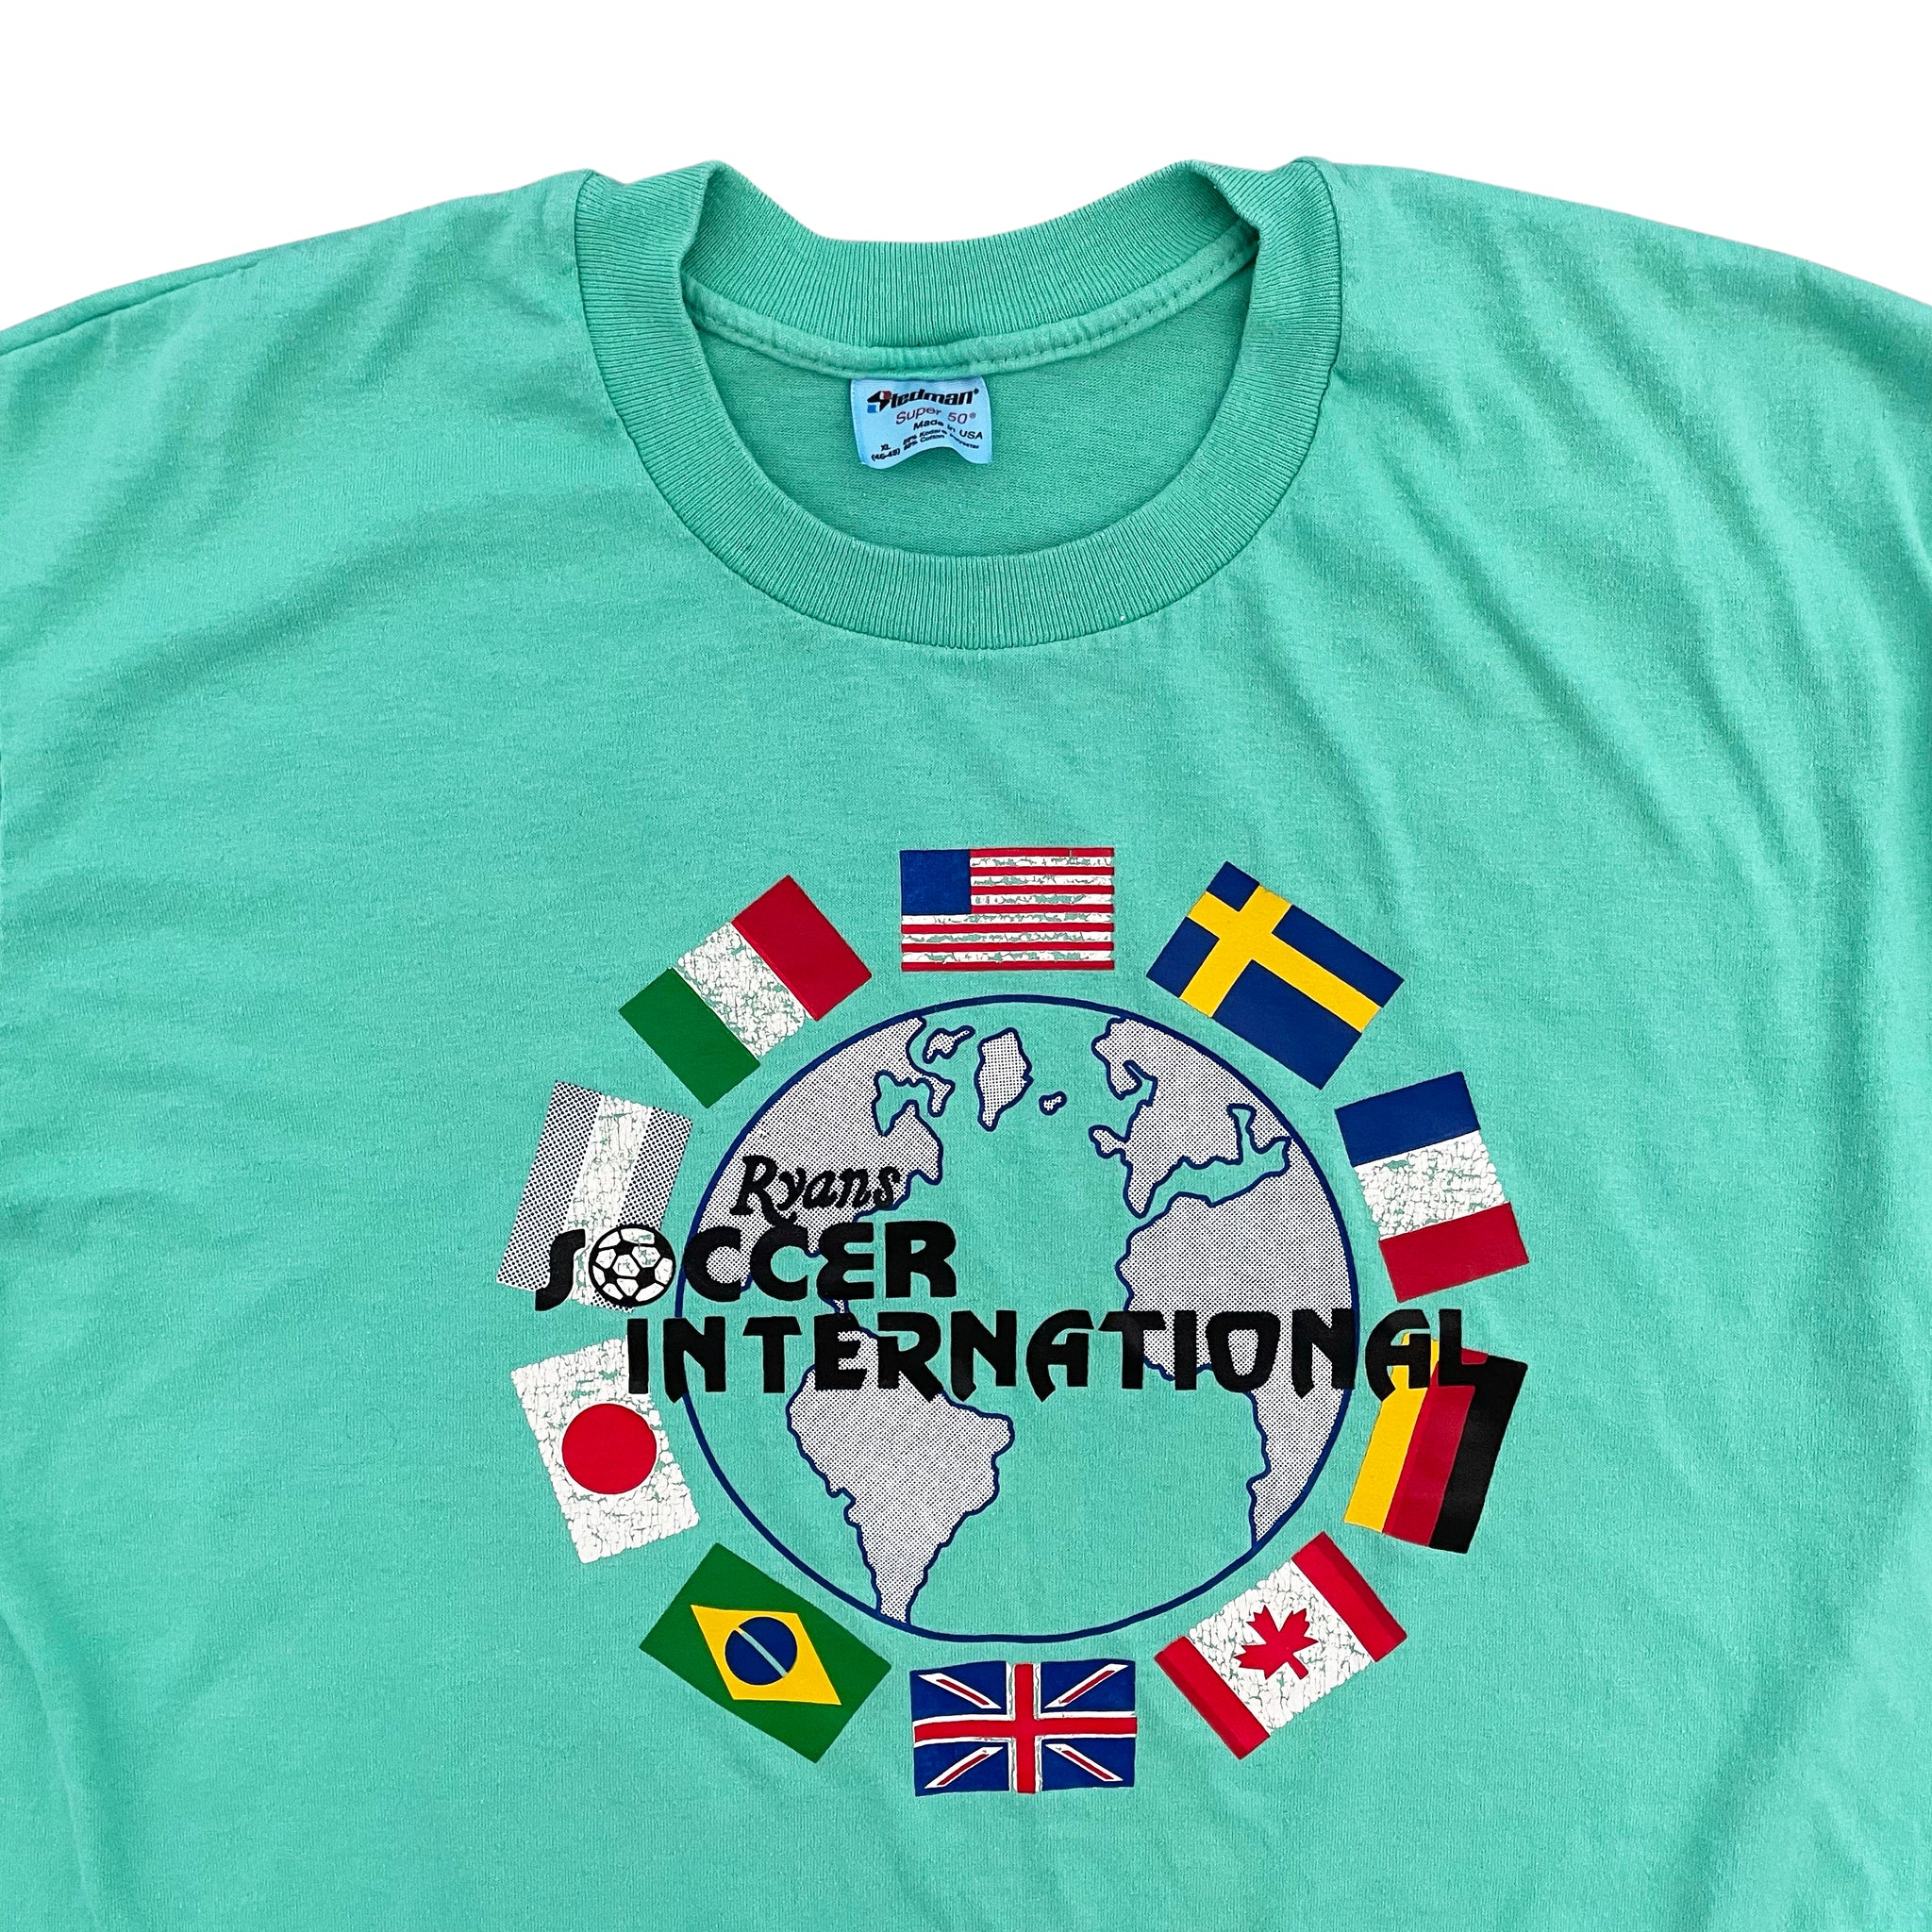 Ryans Soccer International T-Shirt - L